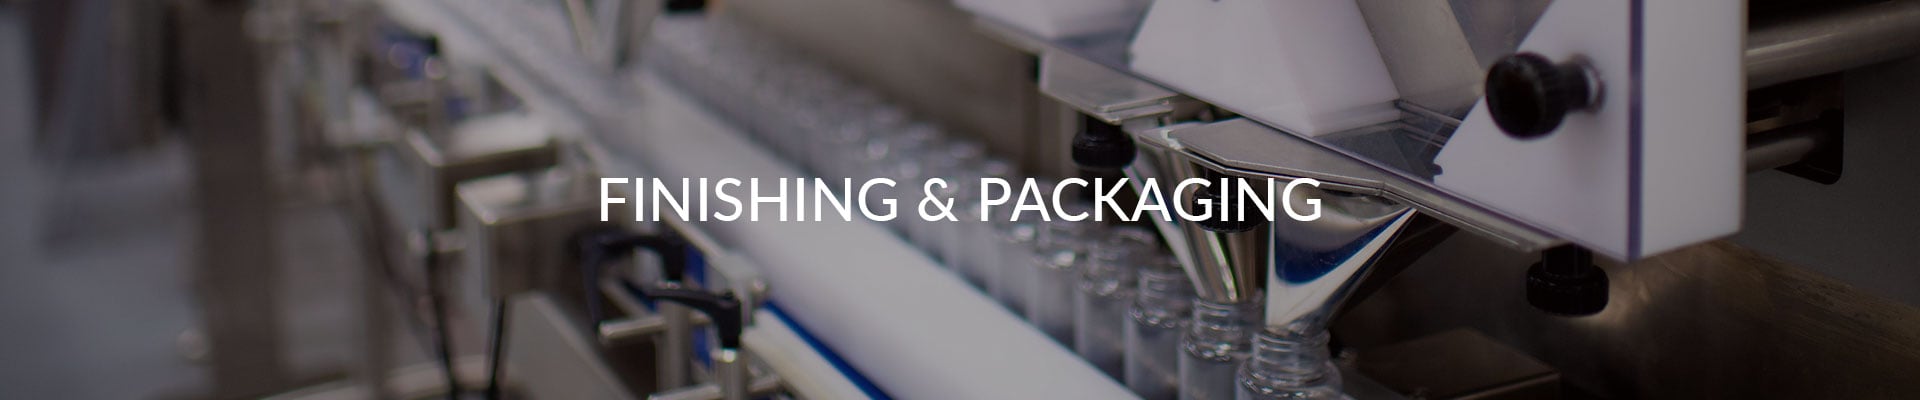 Finishing & Packaging Robinson Pharma, Inc.